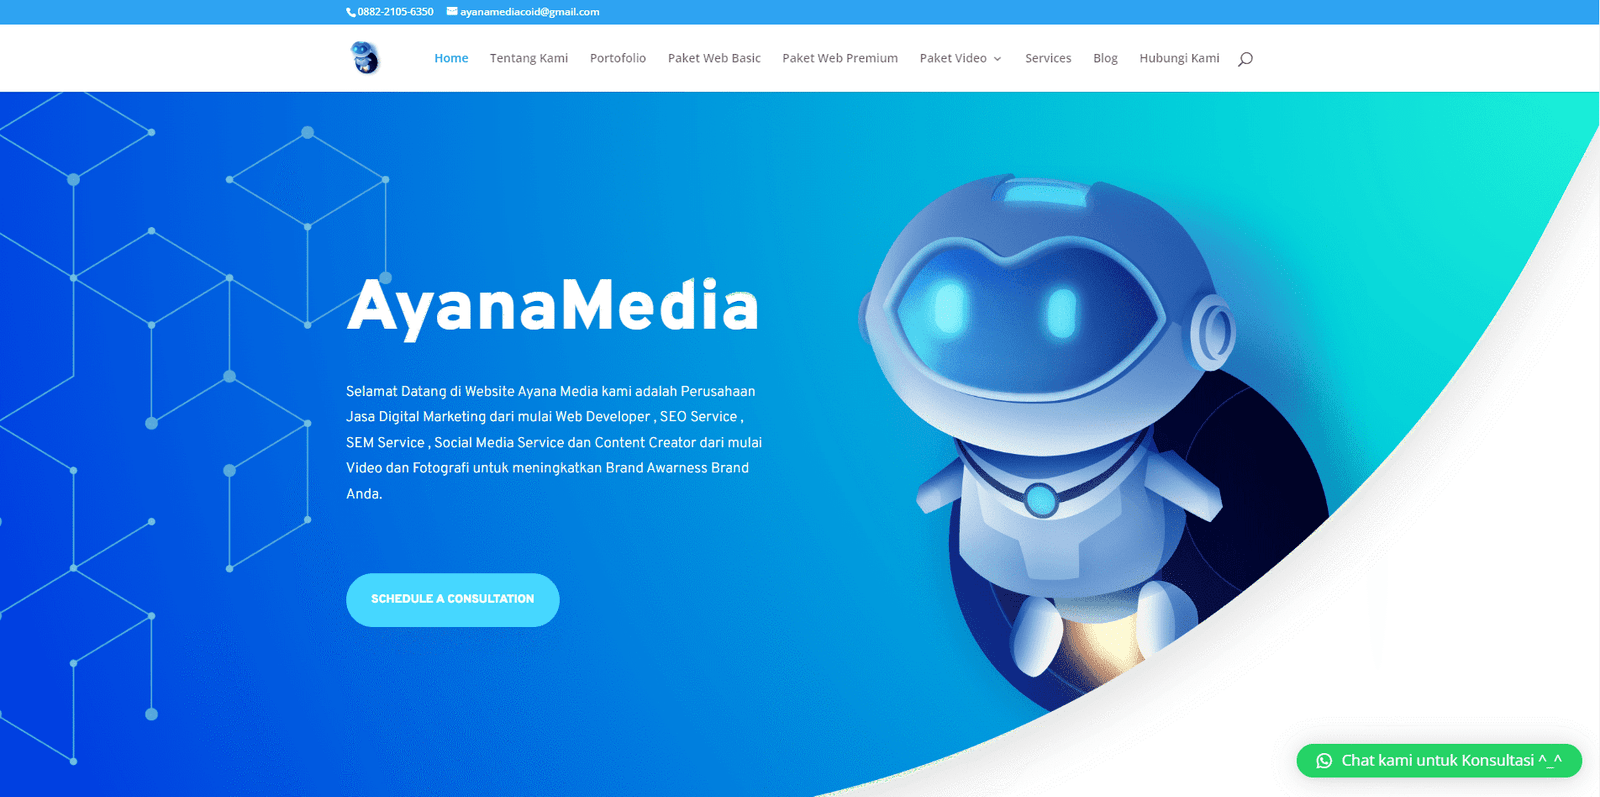 Ayana Media